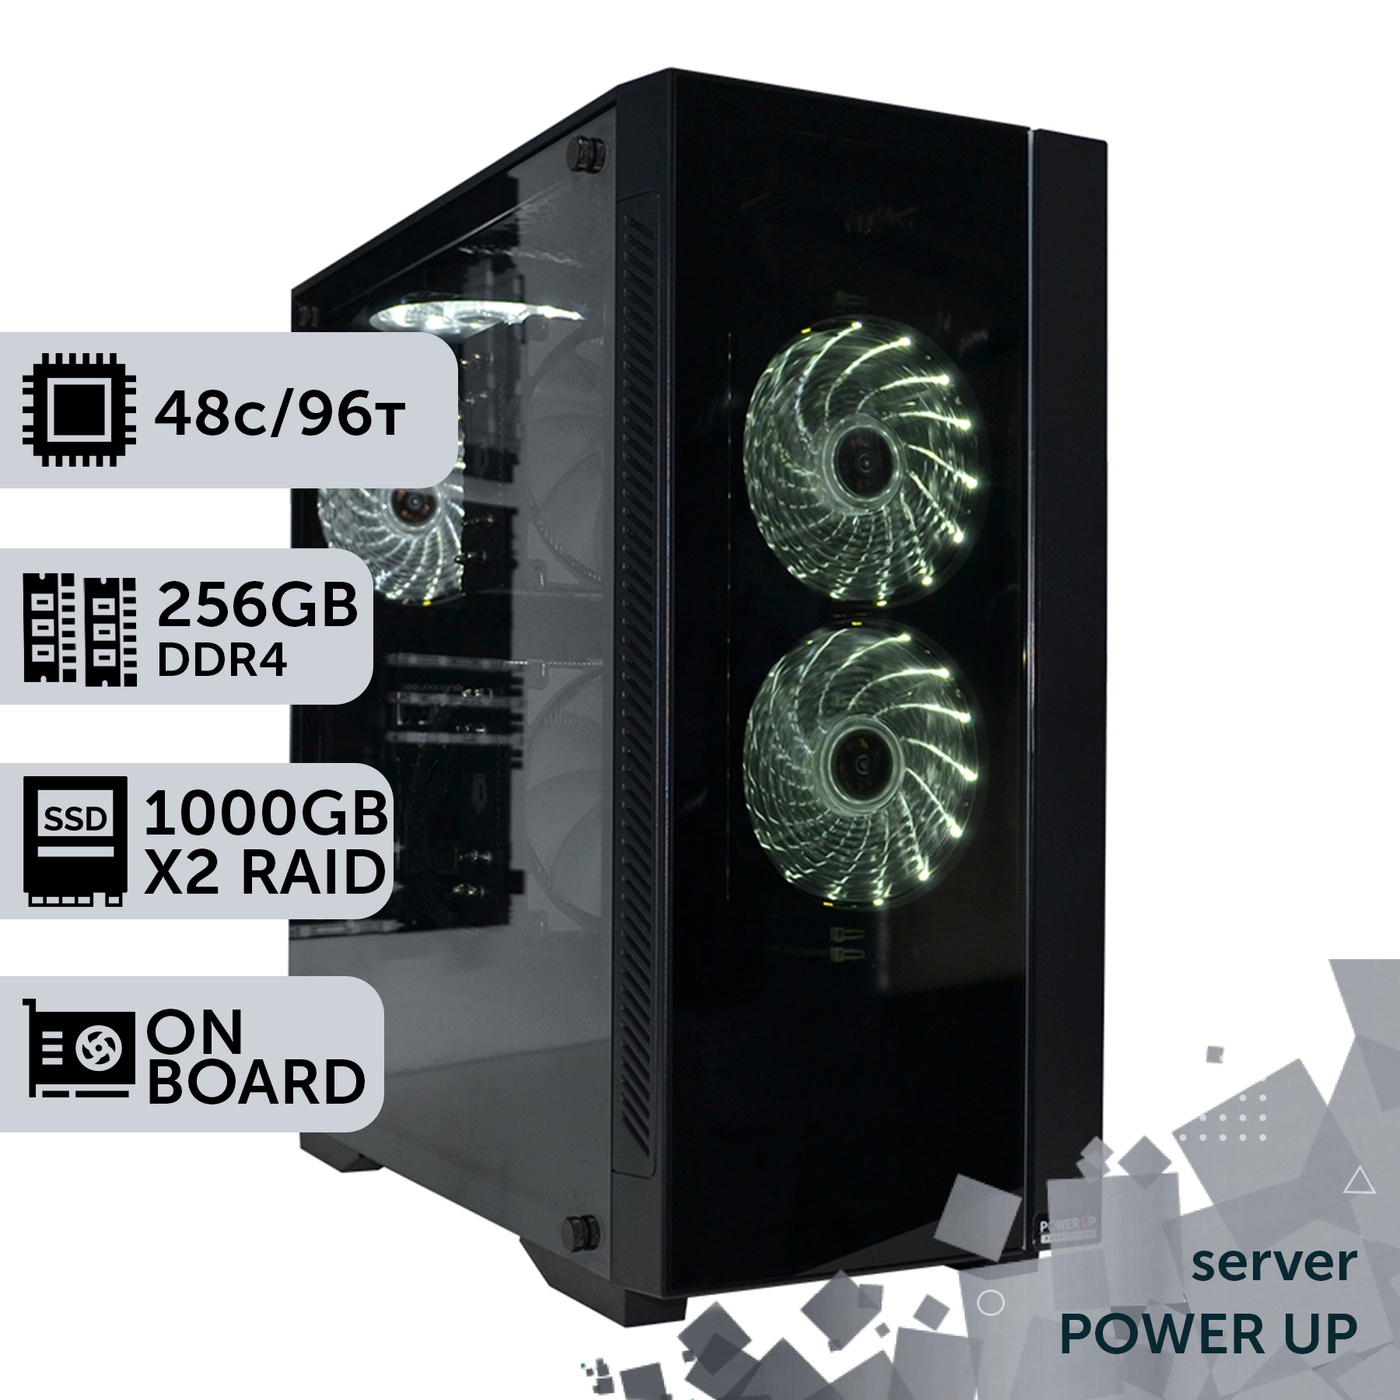 Сервер двухпроцессорный TOWER PowerUp #73 AMD EPYC 7413 x2/256 GB/SSD 1TB х2 Raid/Int Video